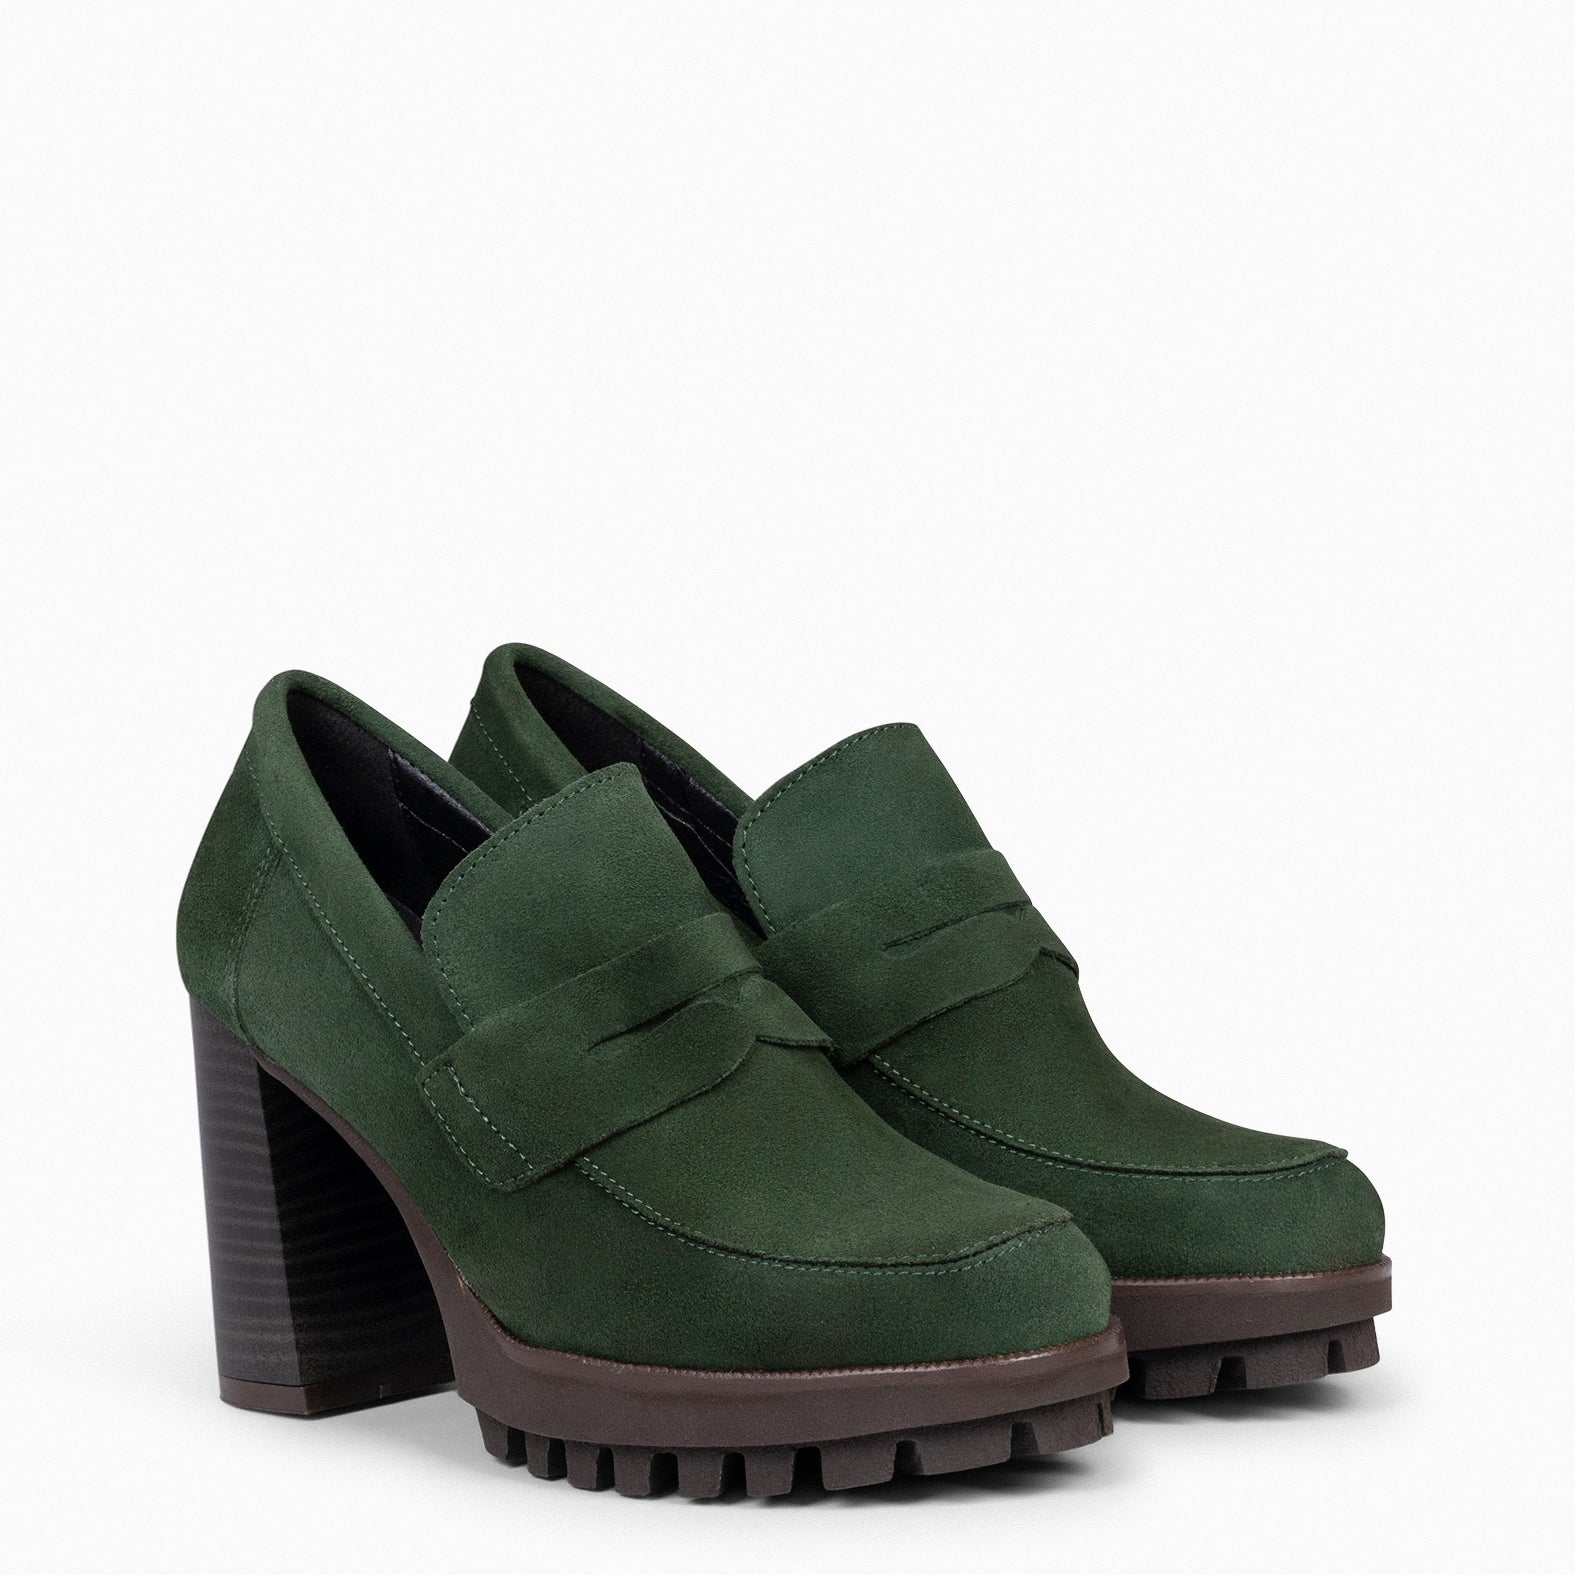 TREND – GREEN high heel moccasins with platform 